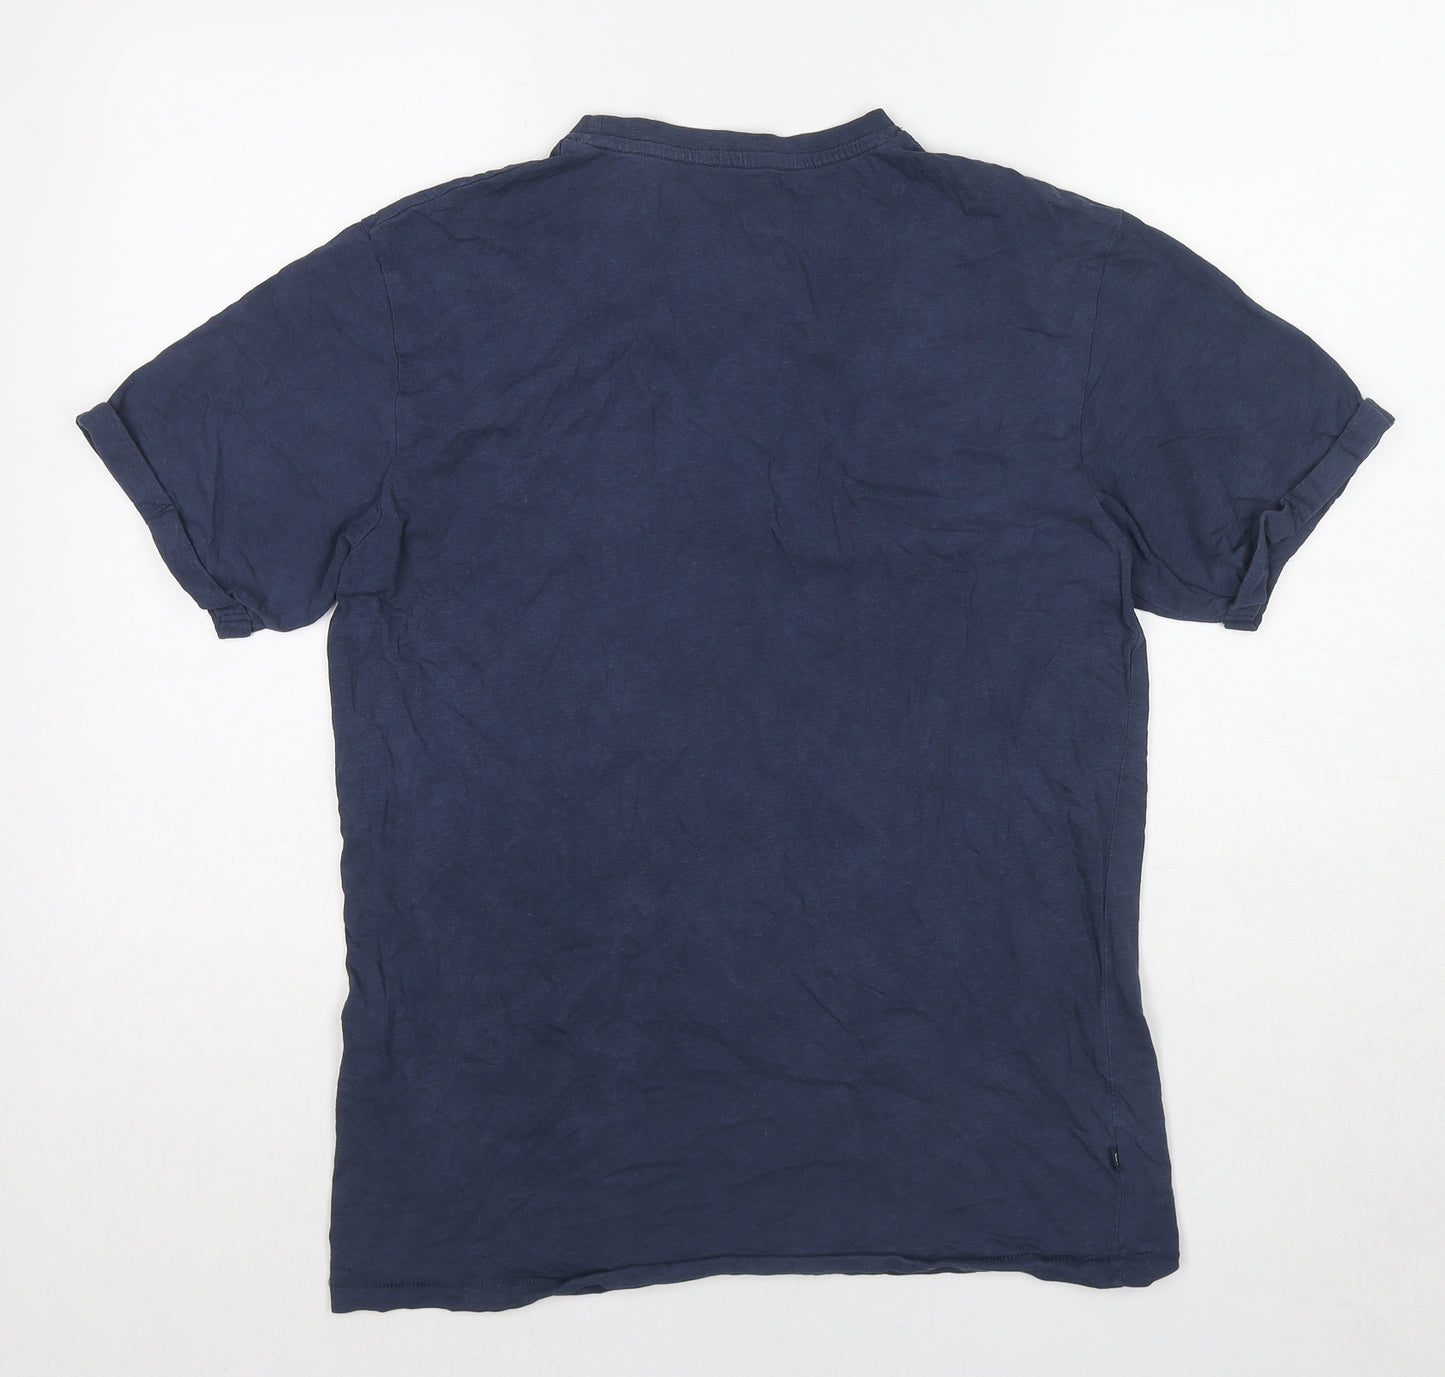 Terranova Mens Blue Cotton T-Shirt Size M Crew Neck